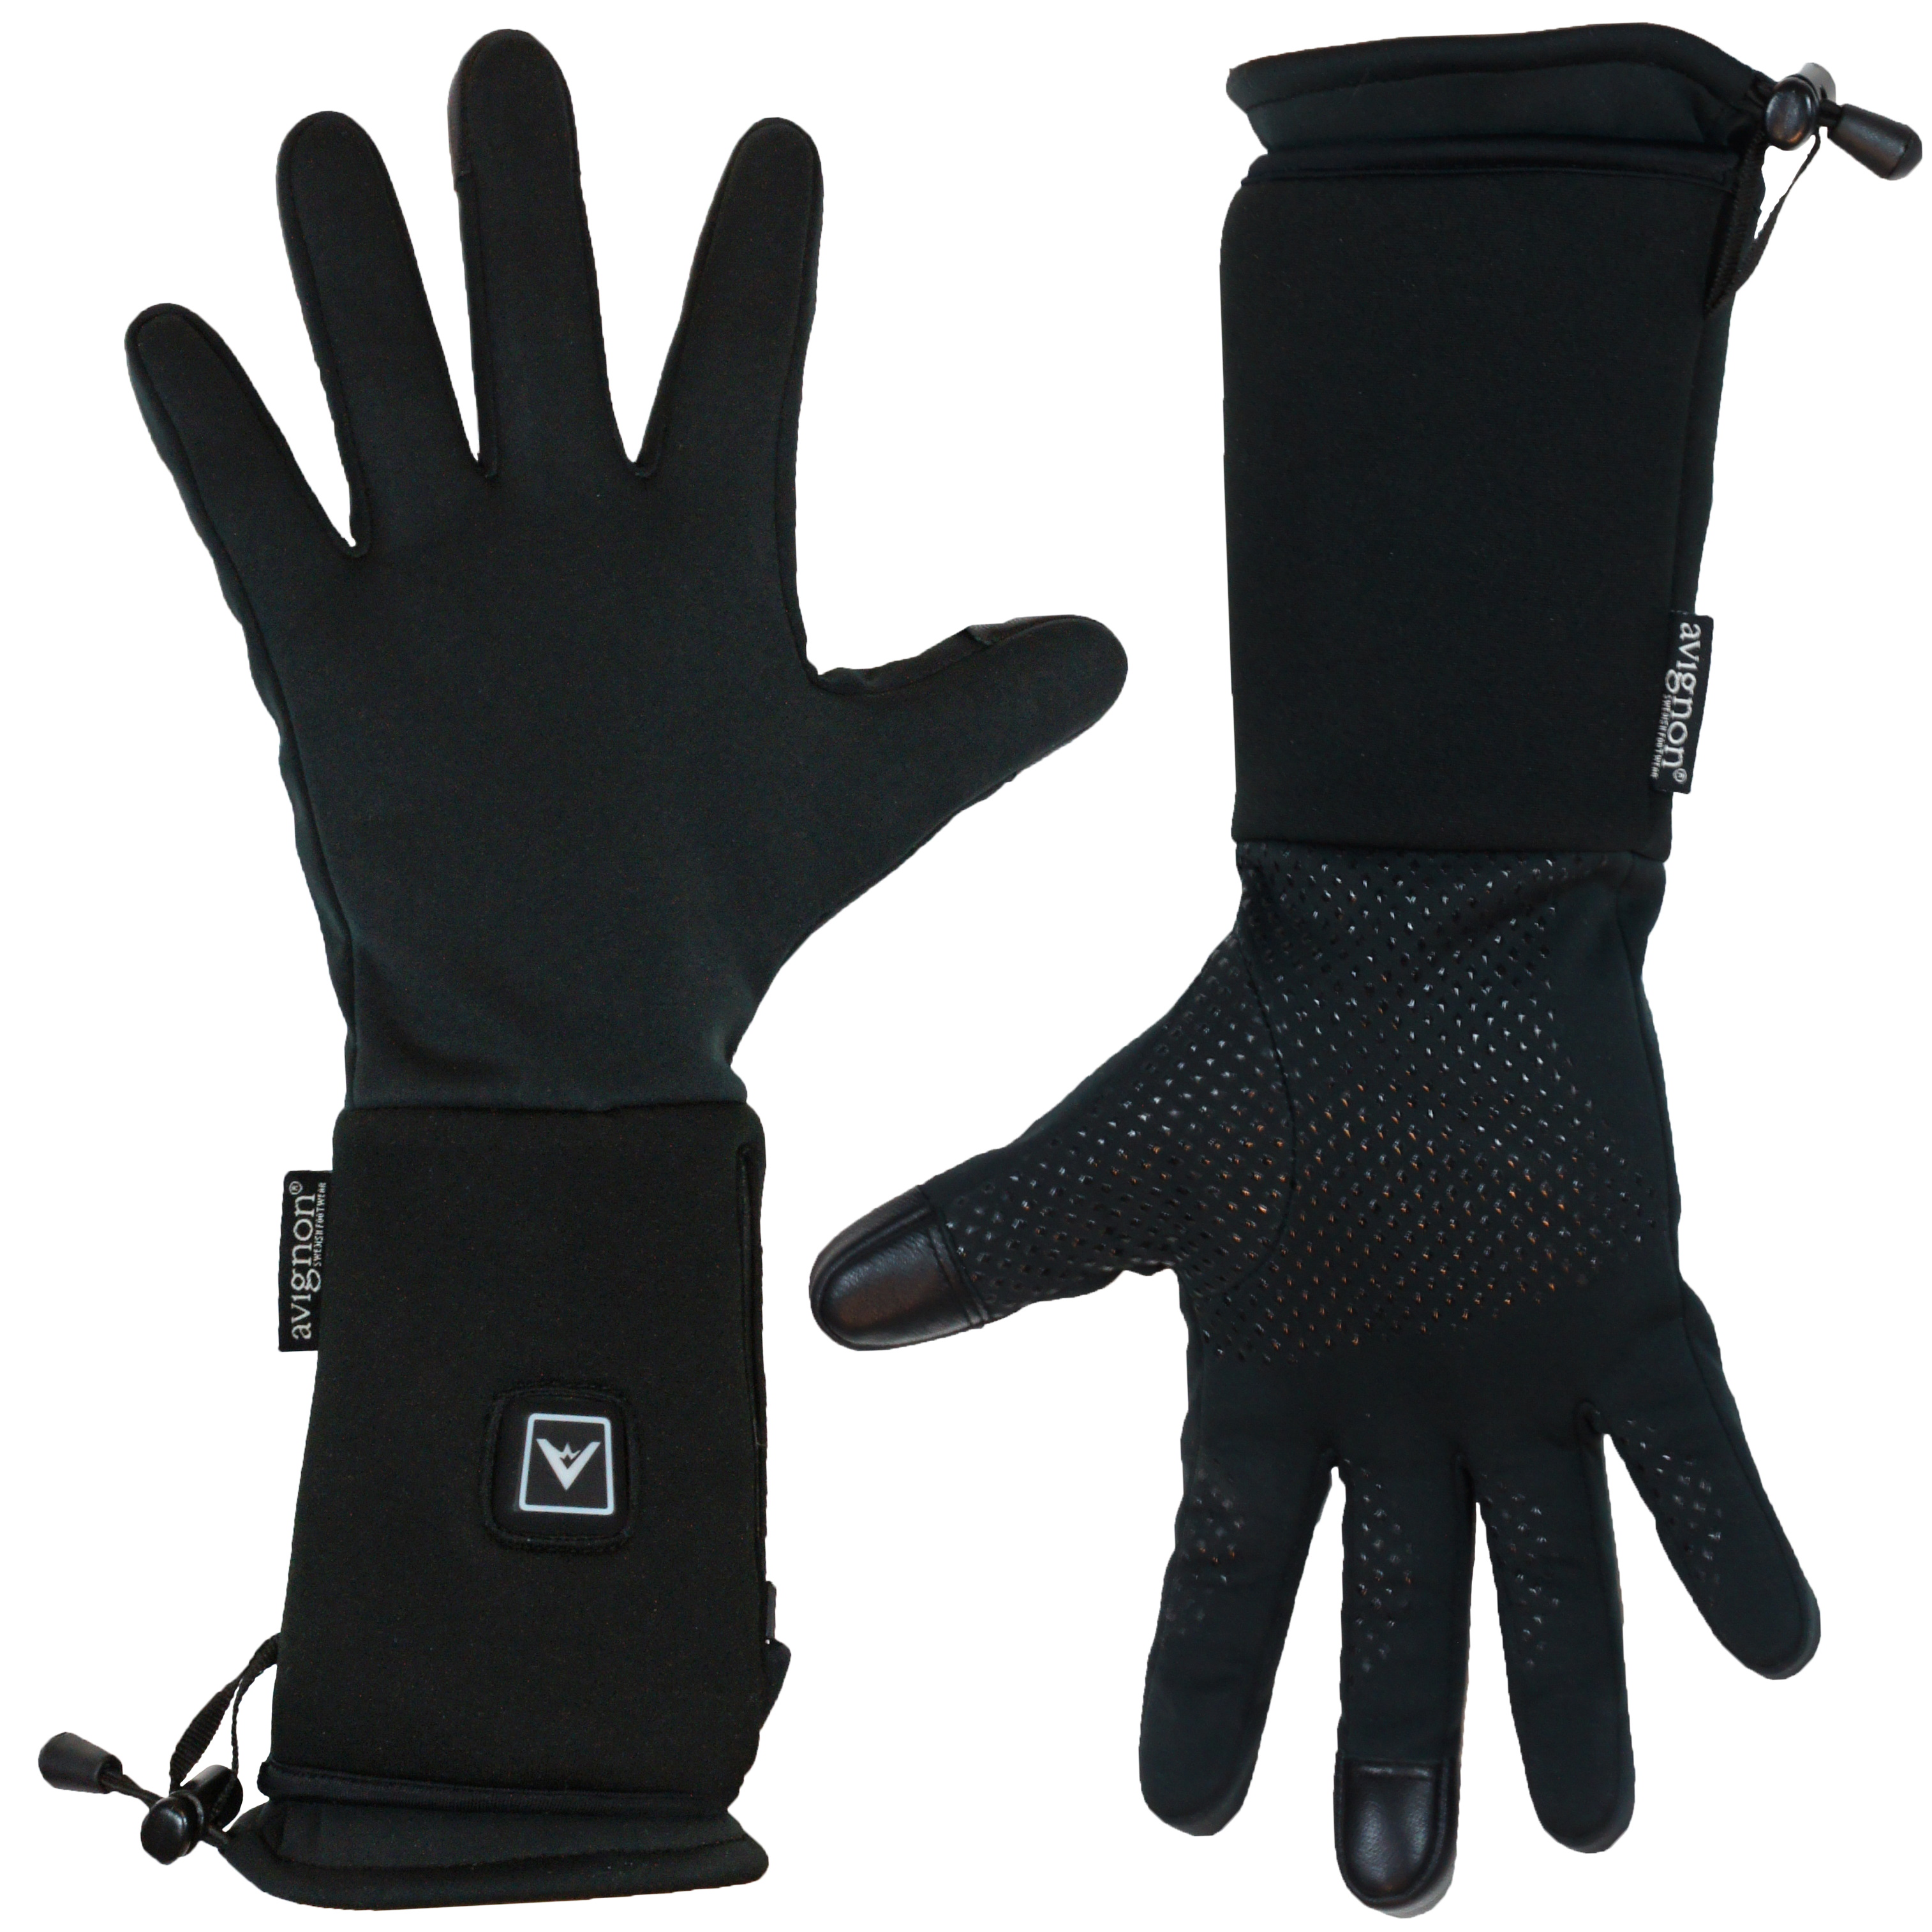 Avignon Warmth Glove Liner Basic Black